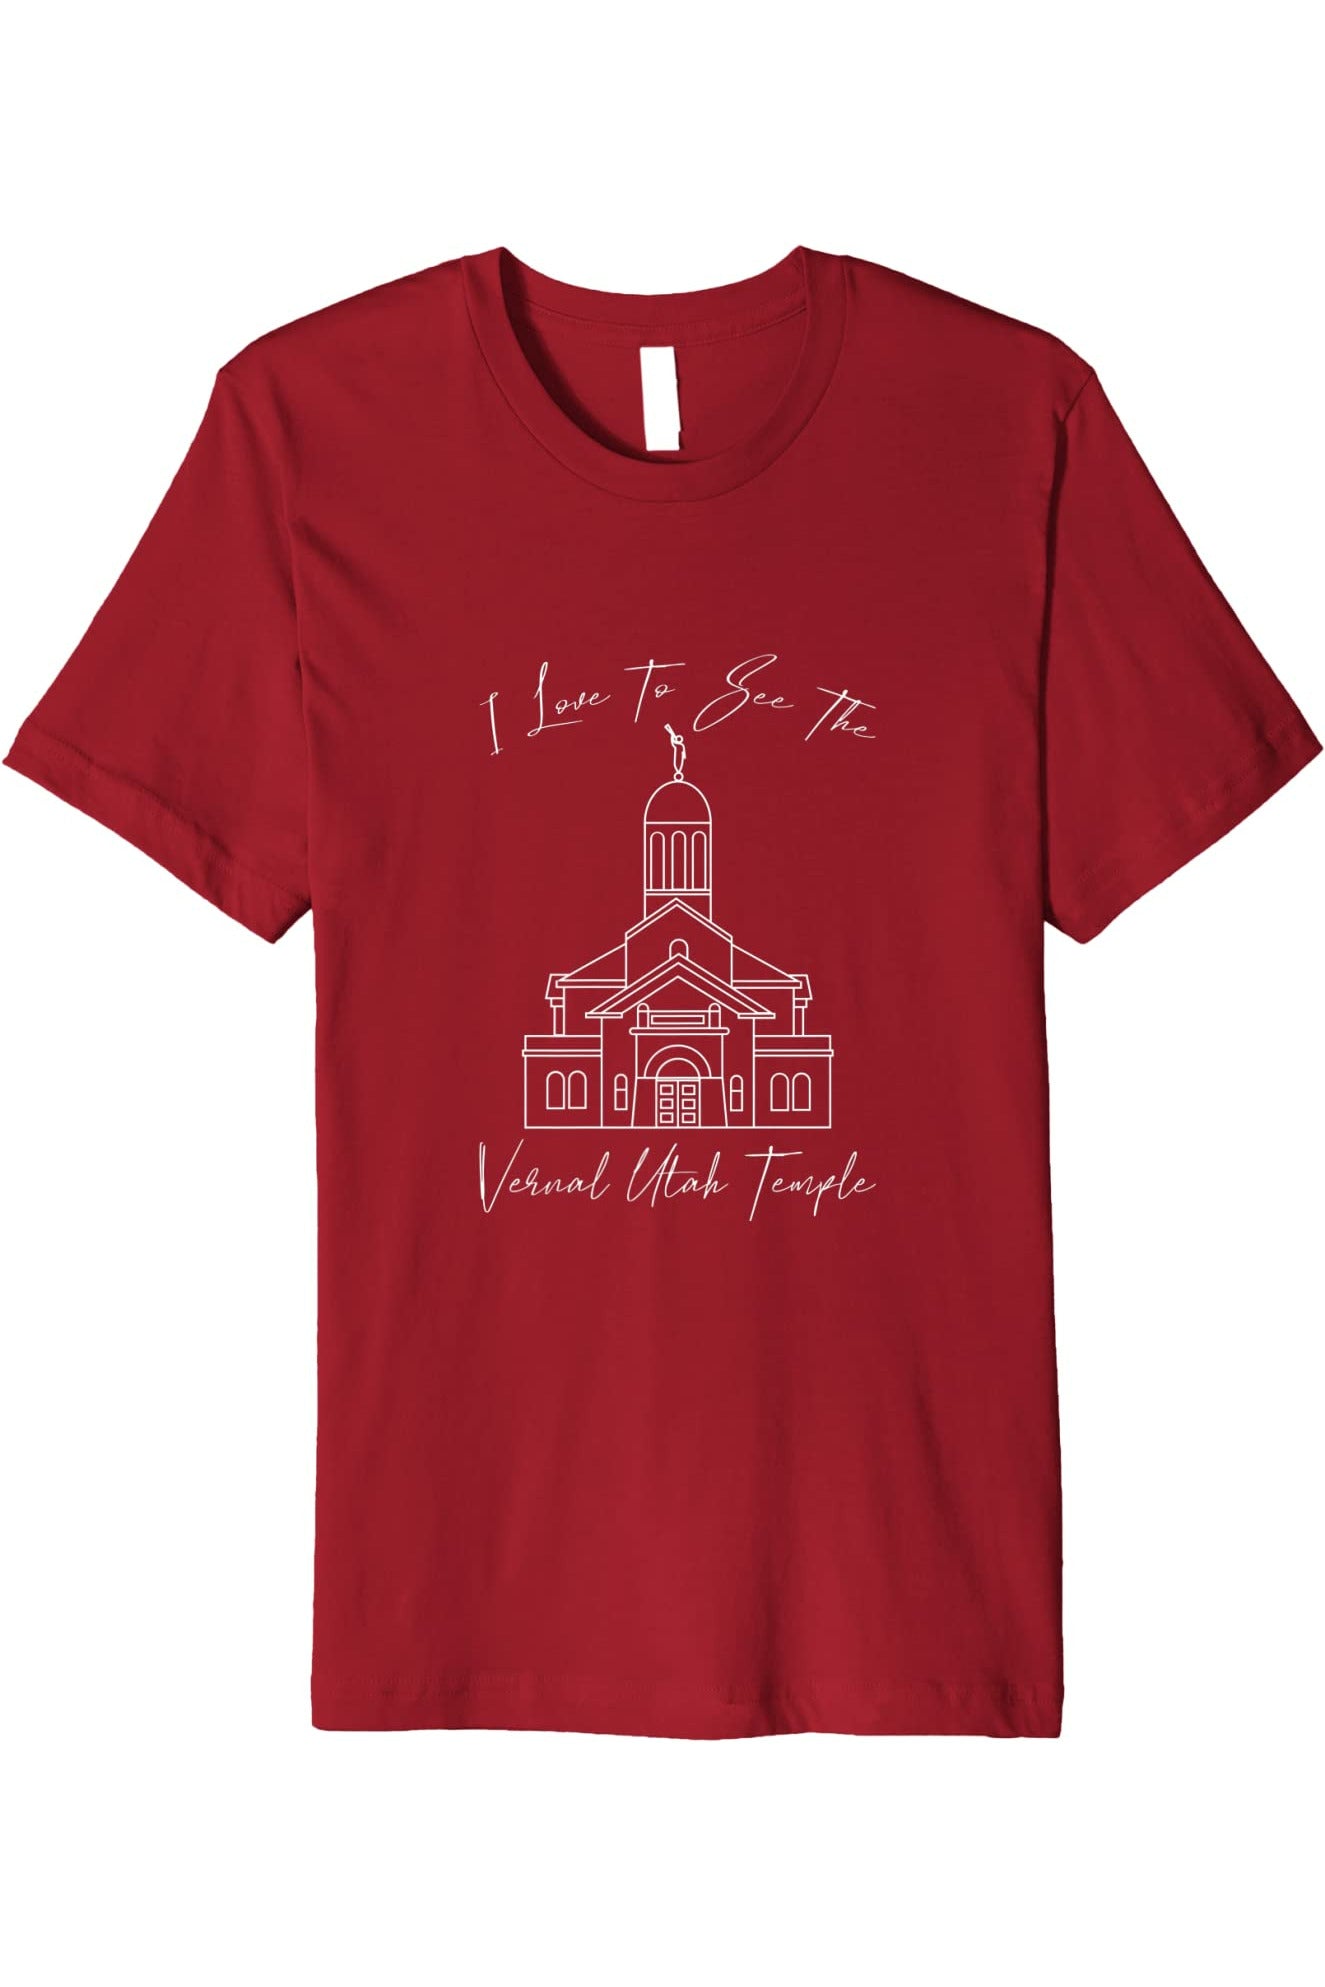 Vernal Utah Temple T-Shirt - Premium - Calligraphy Style (English) US